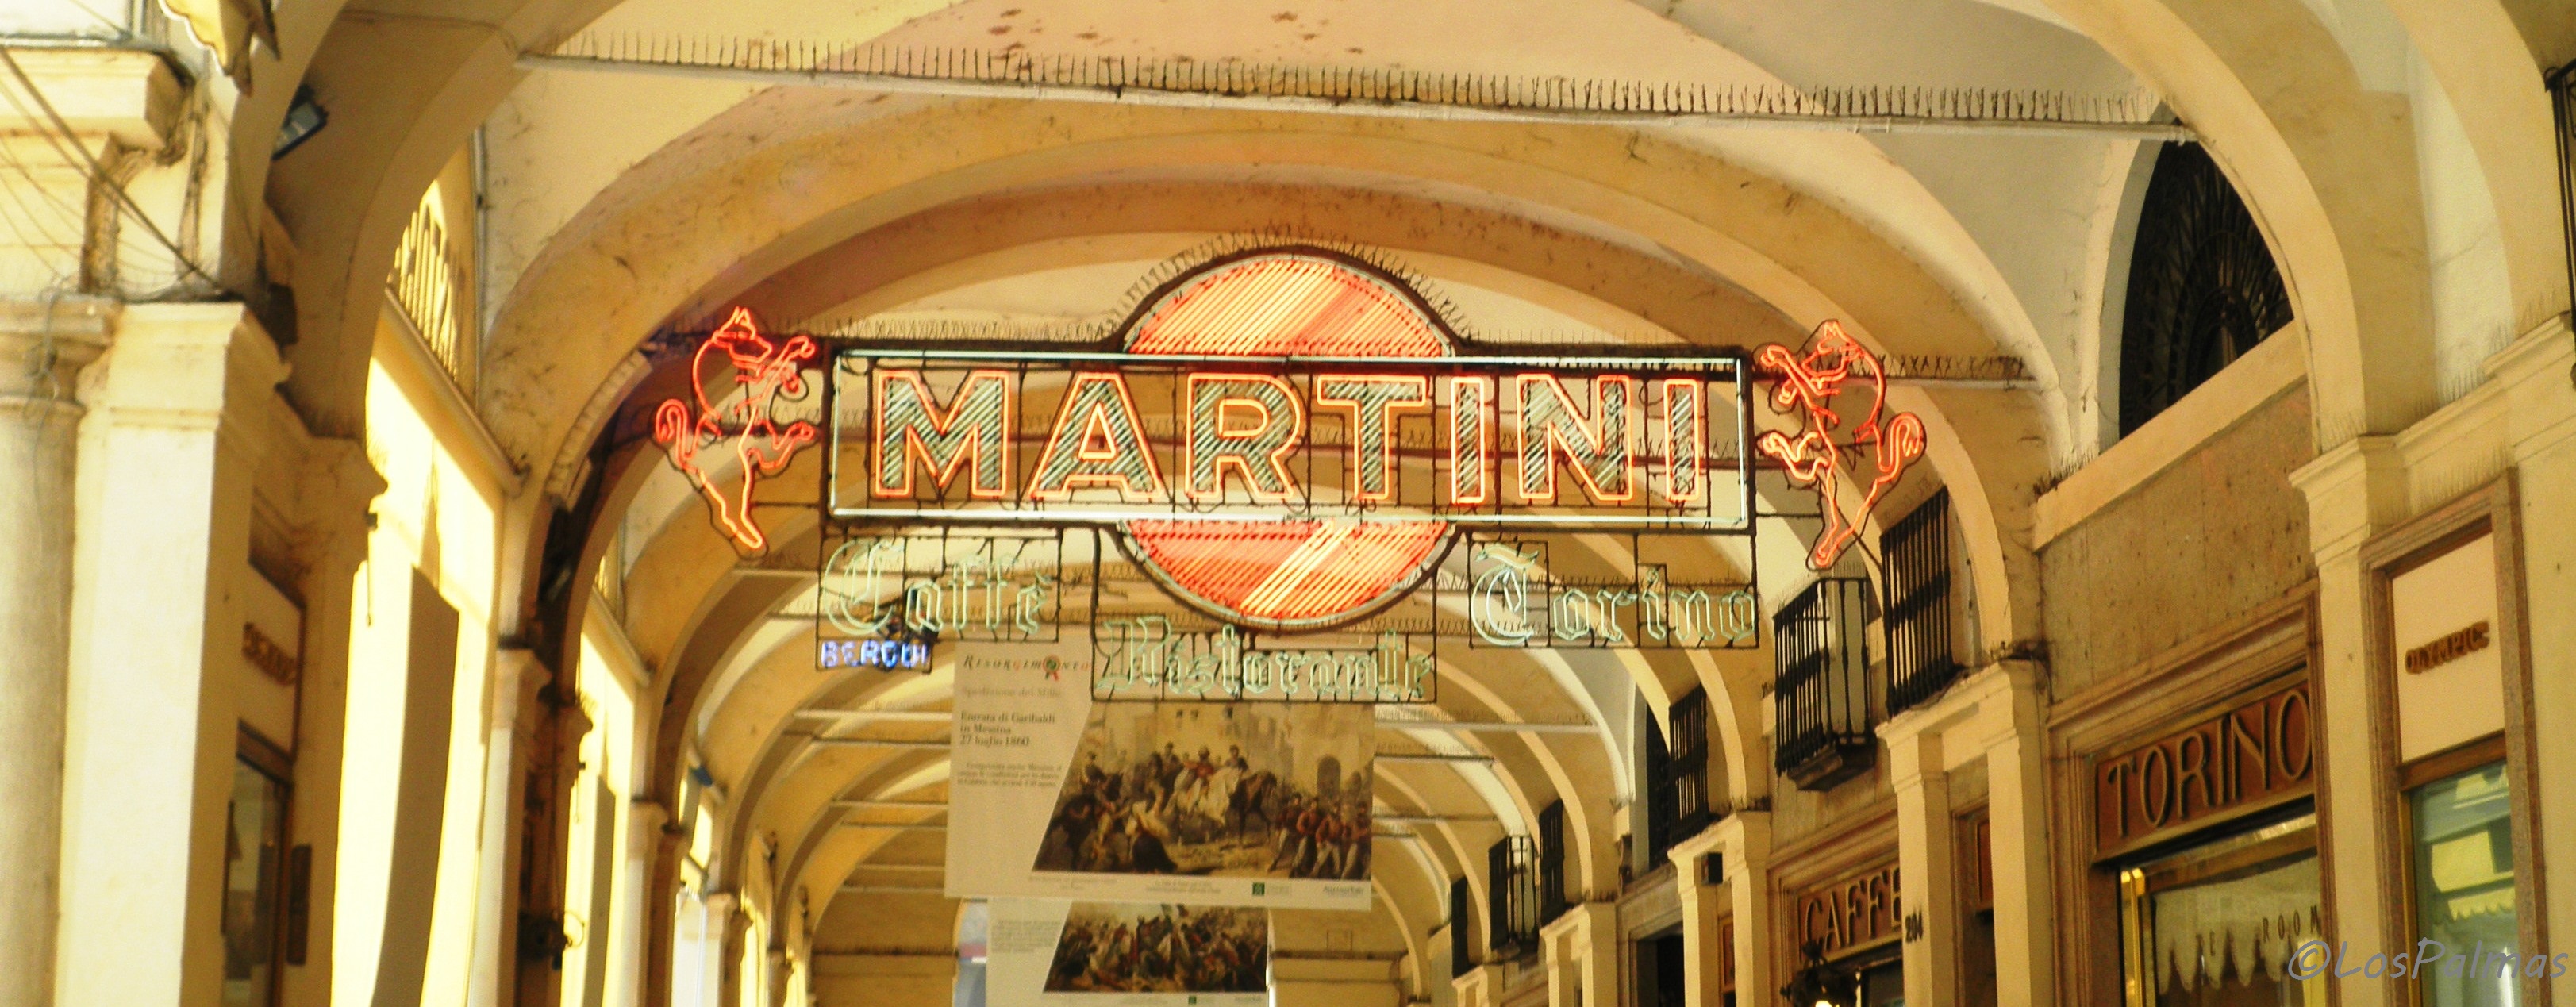 El rótulo del Caffè Torino con el archifamoso Martini